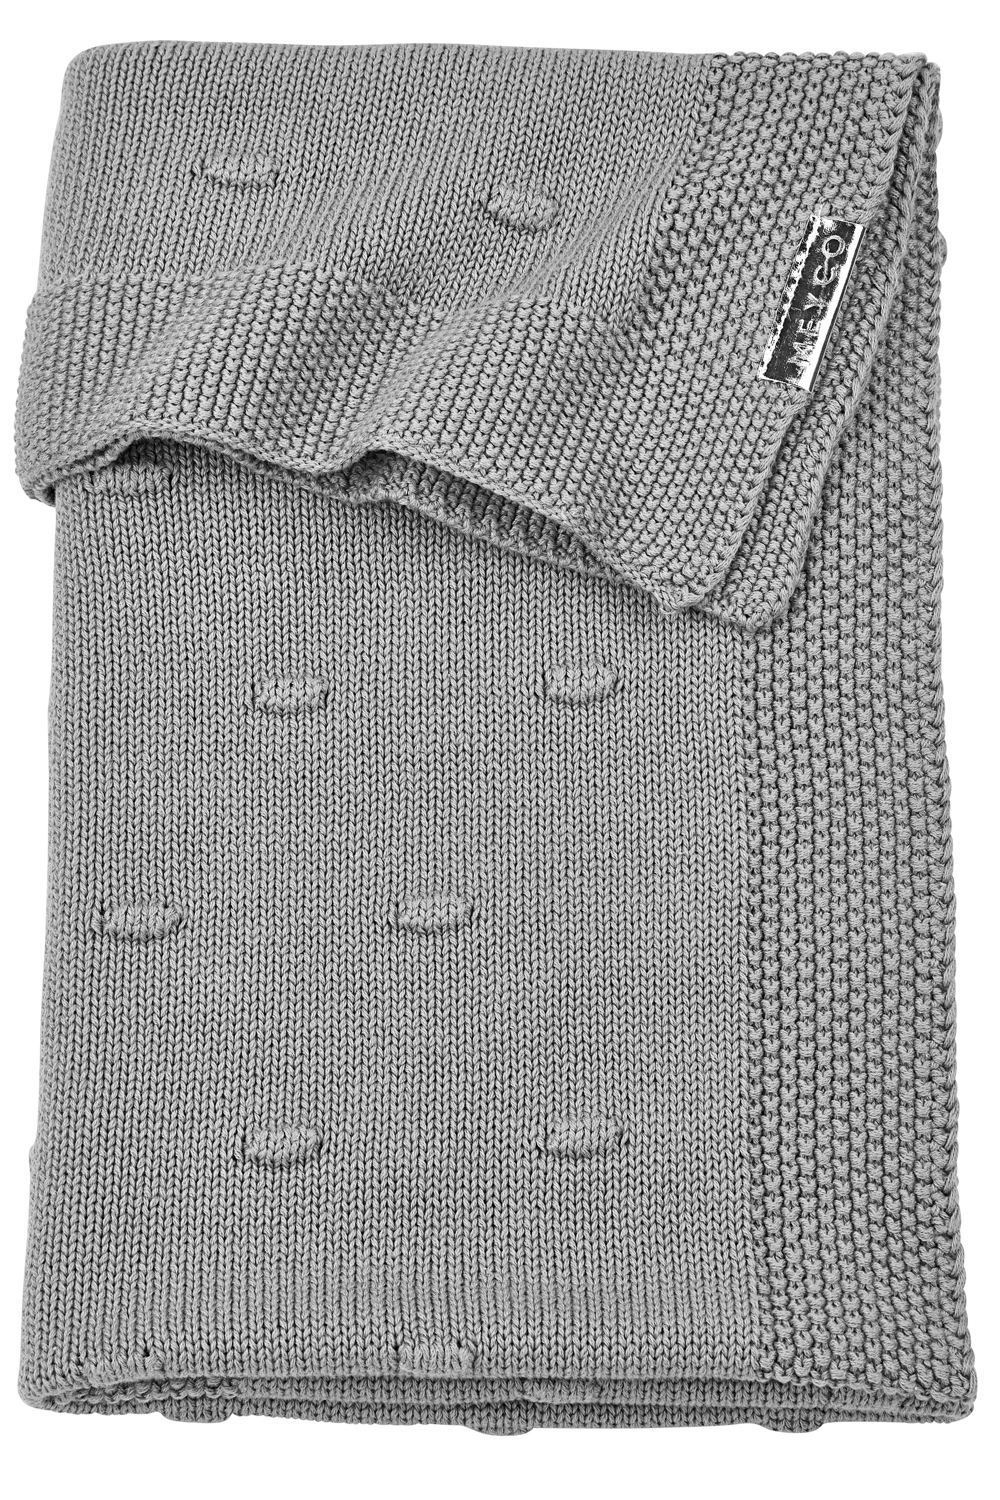 Cot bed blanket Knots - grey - 100x150cm